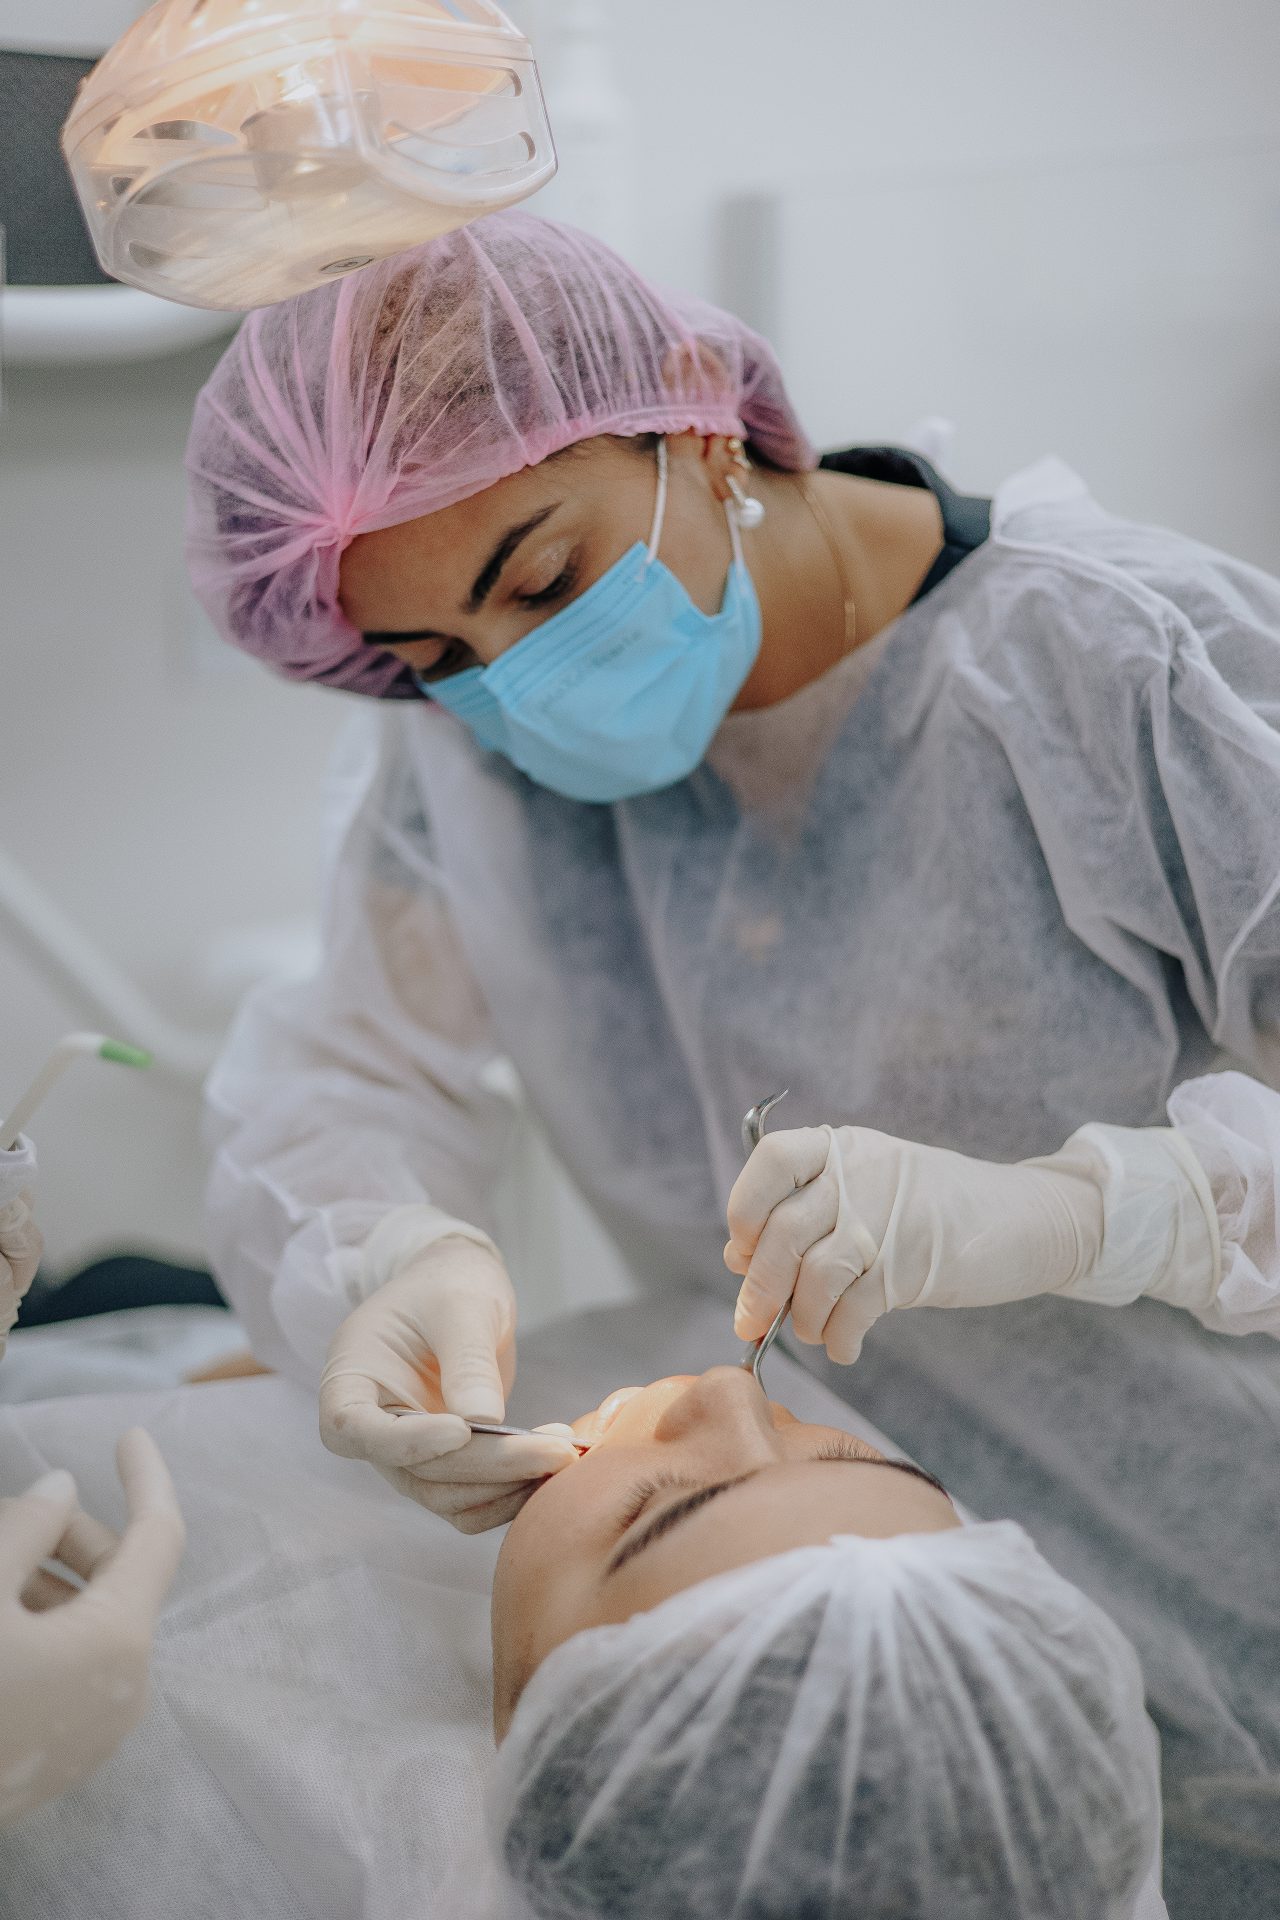 Aluna da EAP Goiás atendendo paciente e realizando procedimentos odontológicos